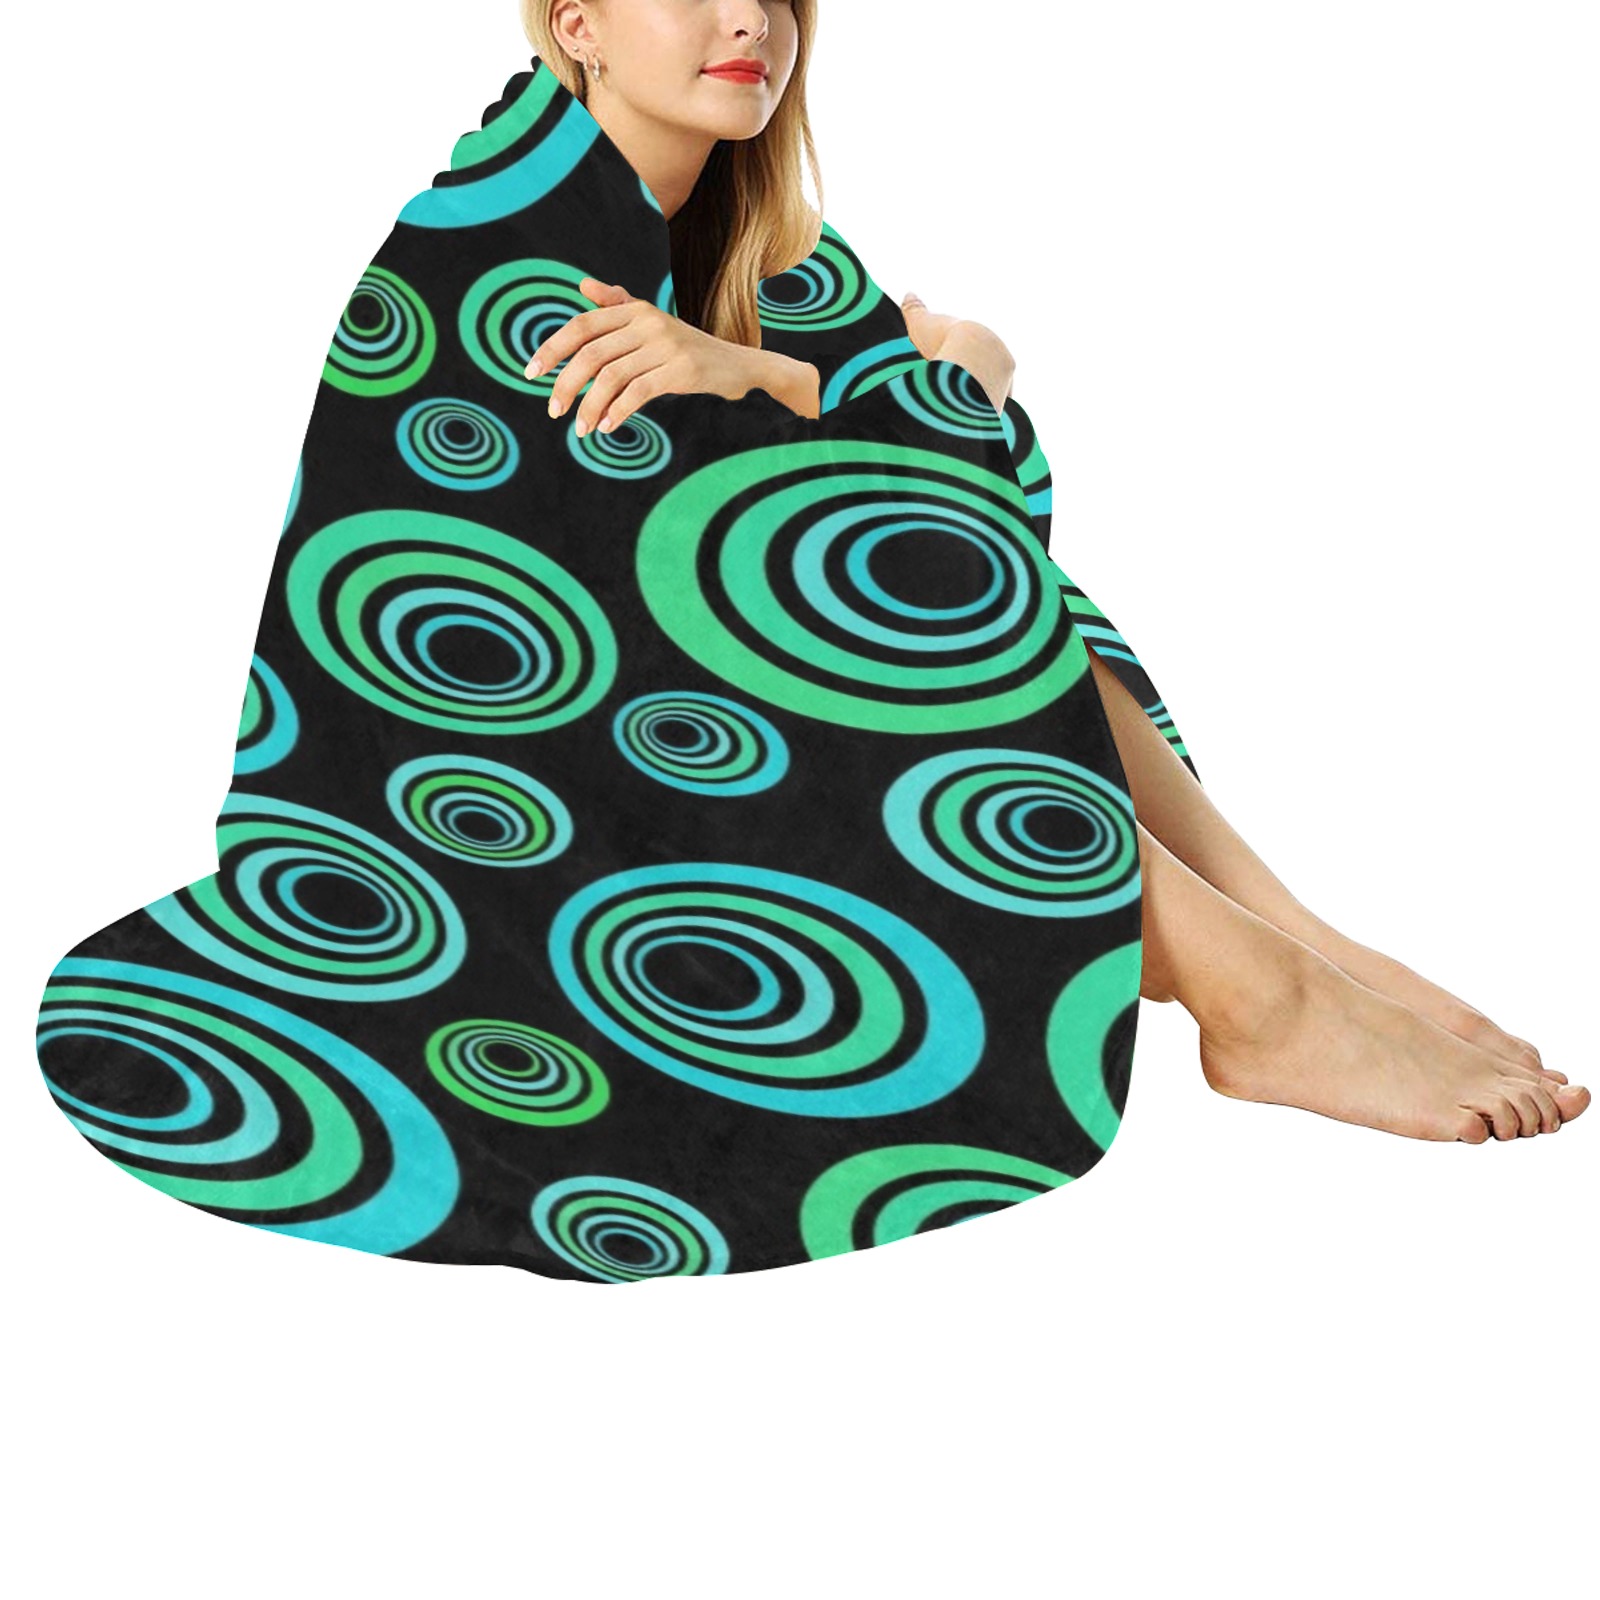 Retro Psychedelic Pretty Green Pattern Circular Ultra-Soft Micro Fleece Blanket 47"